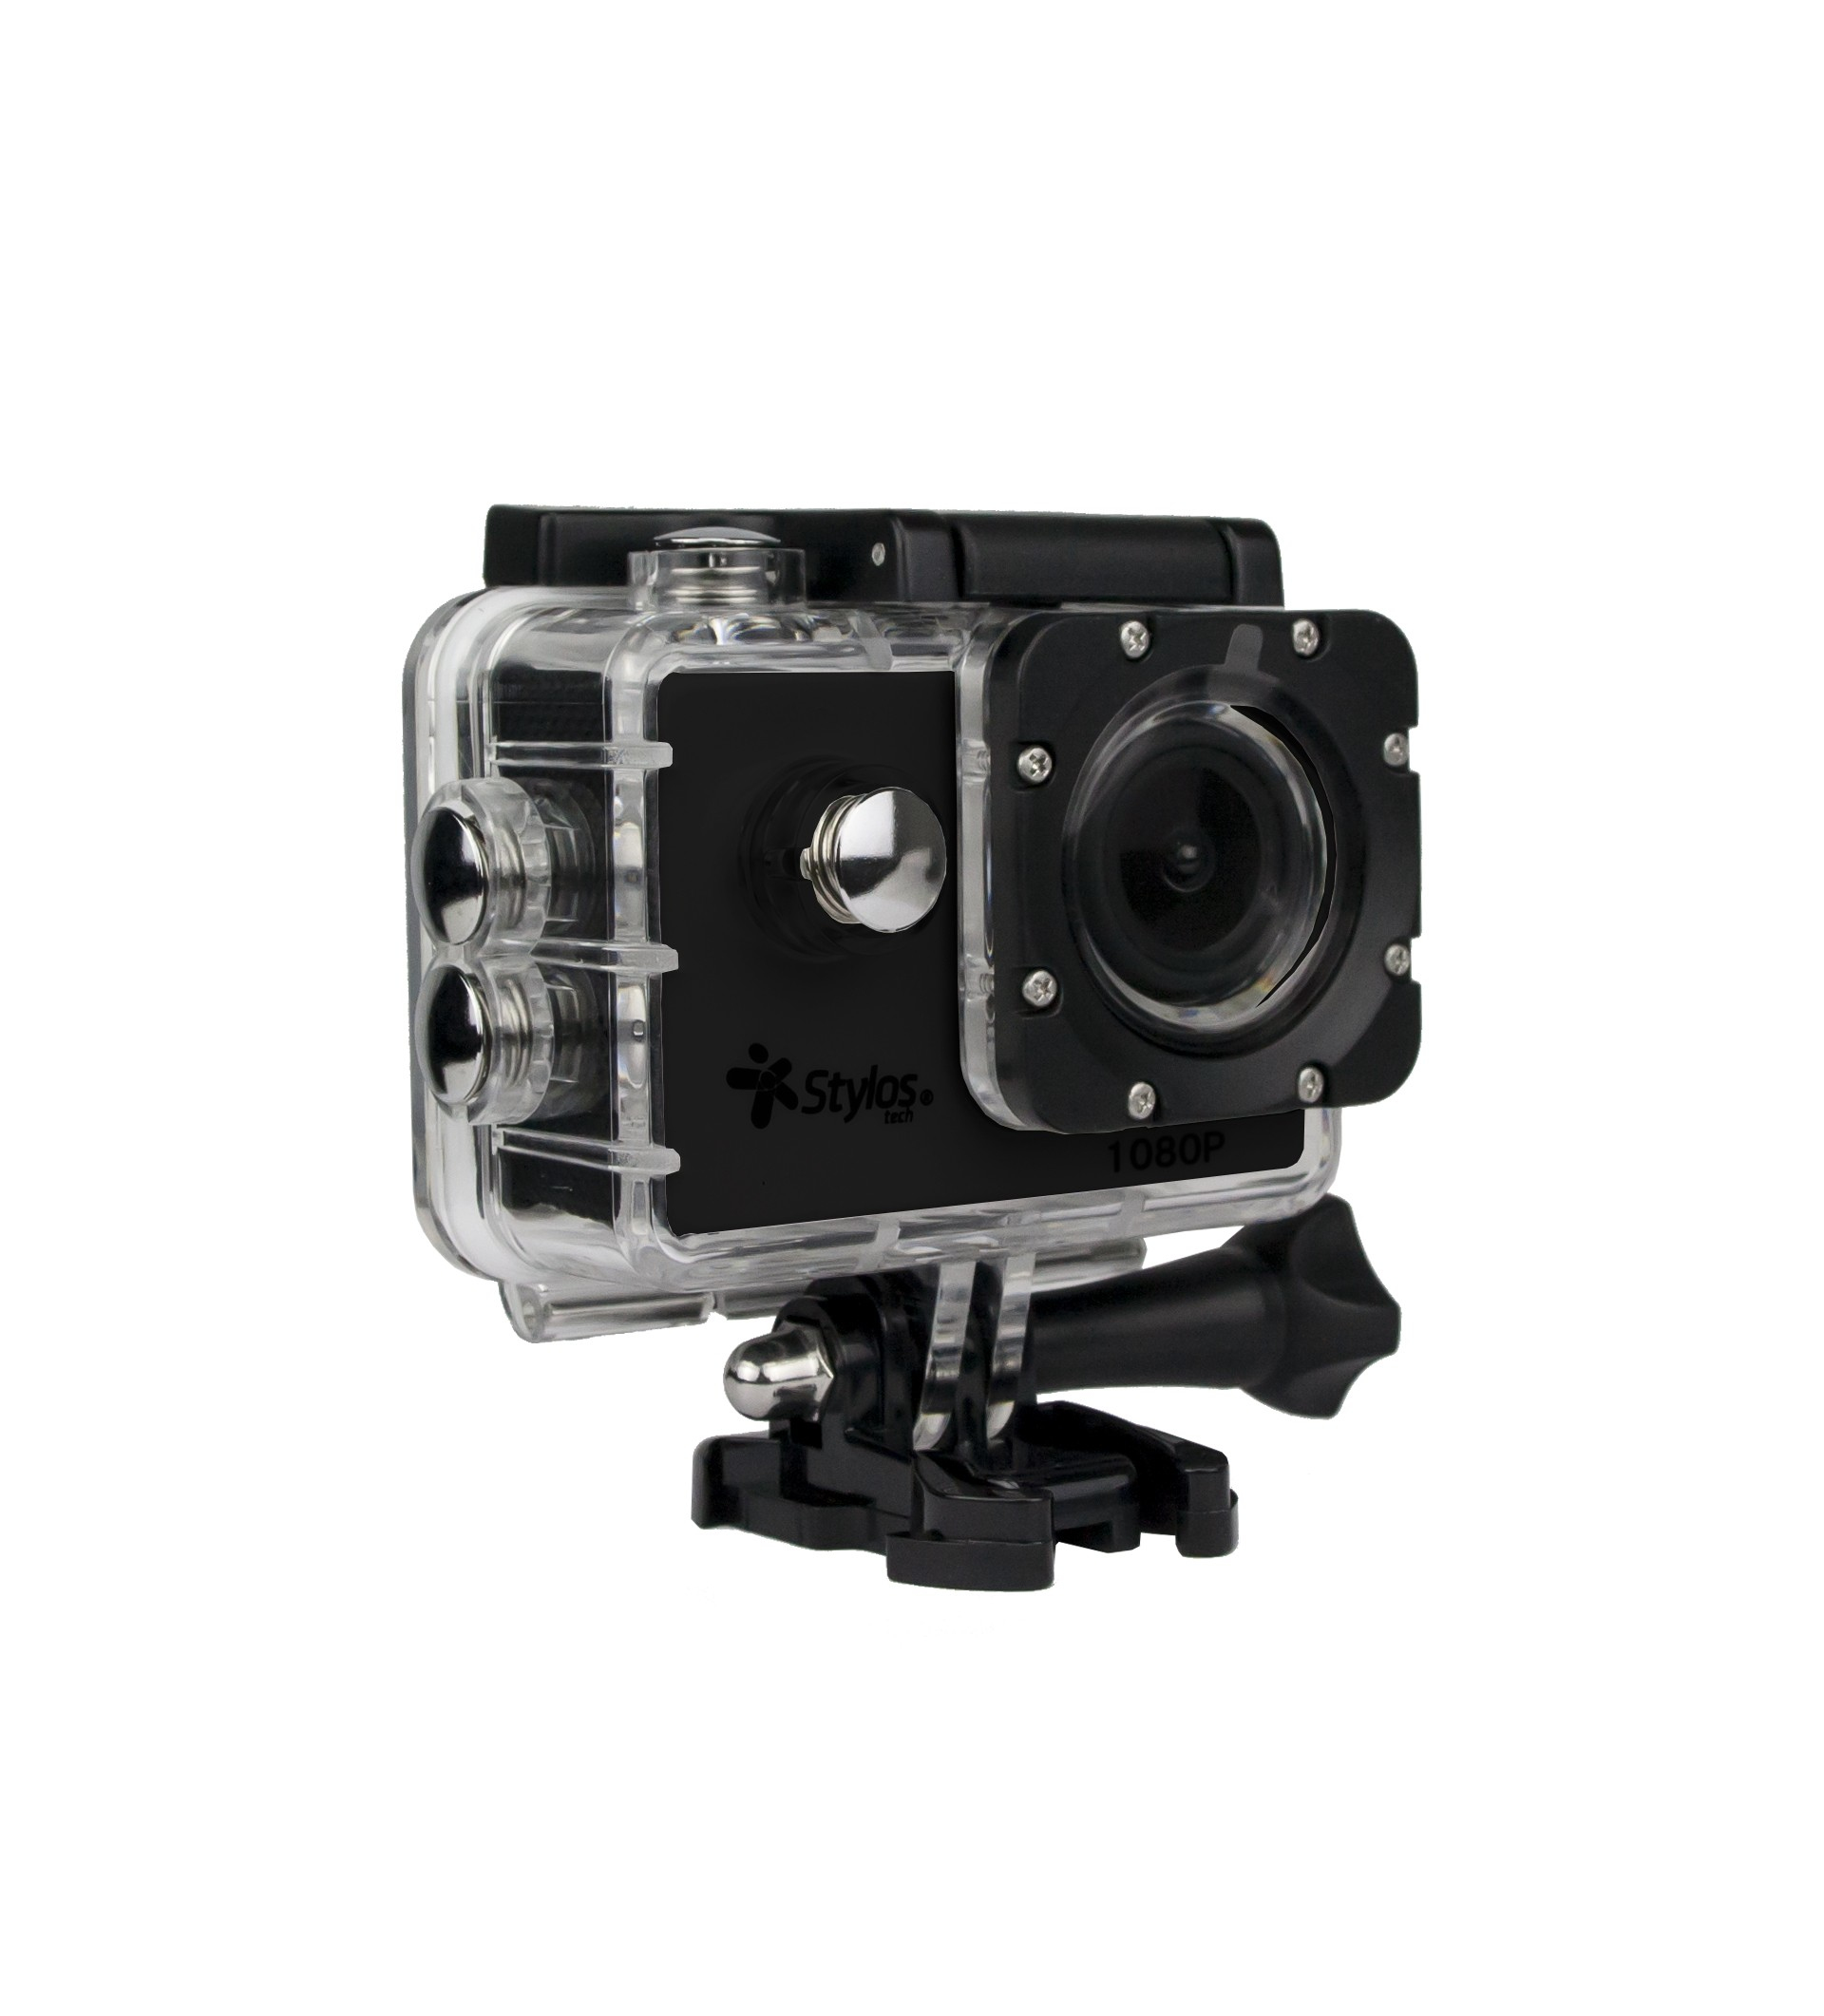 Stylos STVACX3 cámara para deporte de acción 12 MP Full HD Wifi